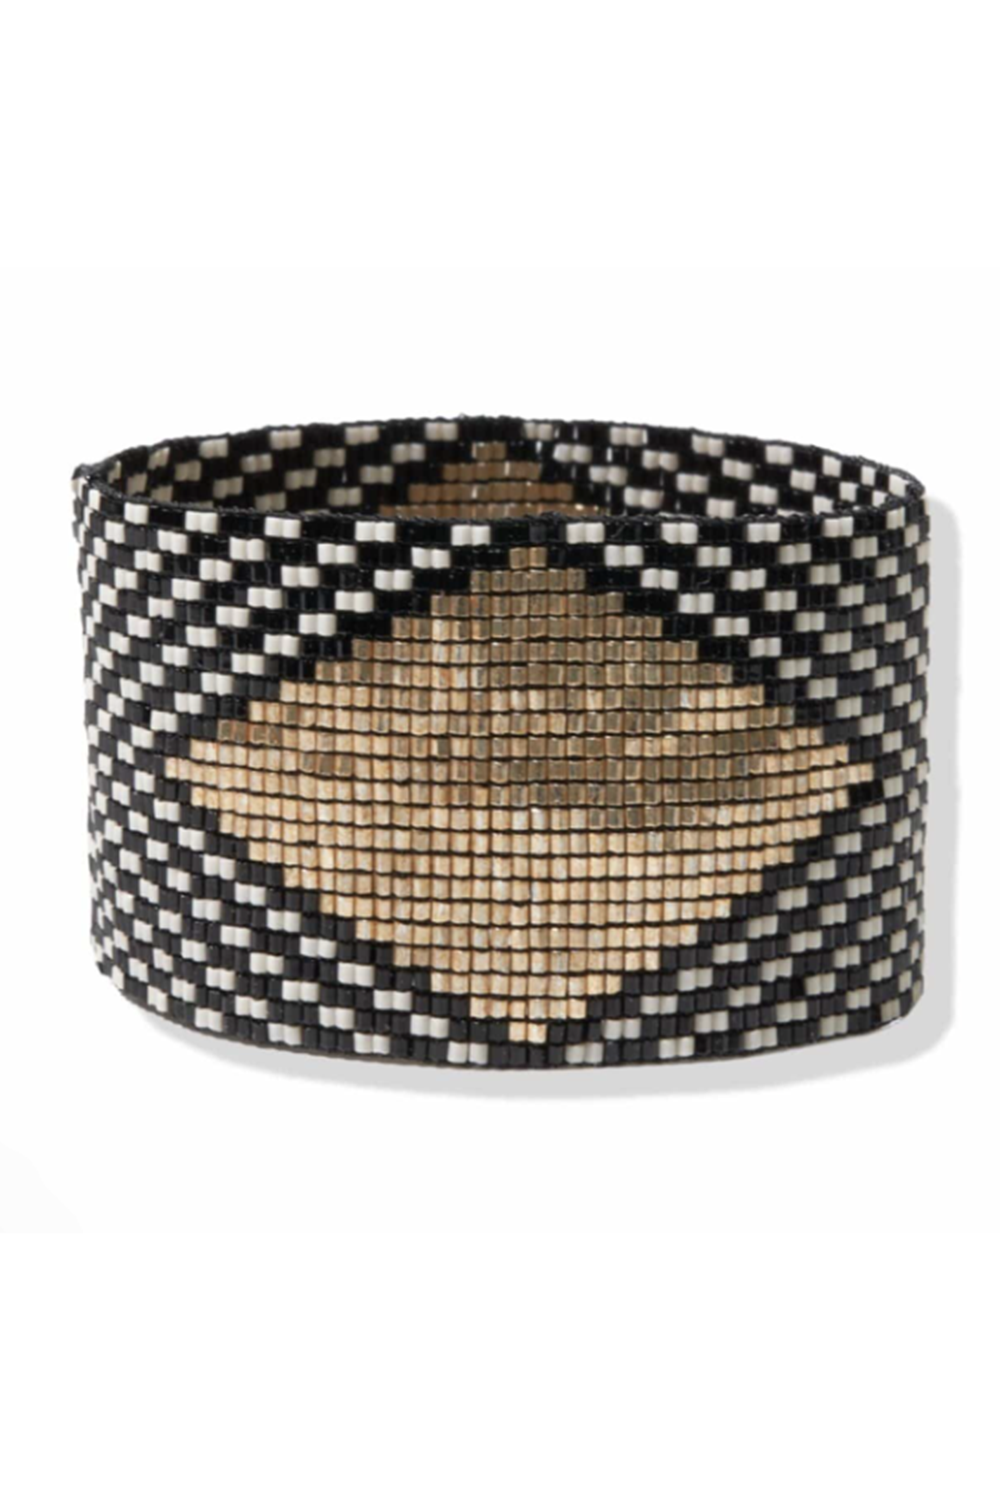 Brooklyn Diamond Beaded Luxe Bracelet - Black